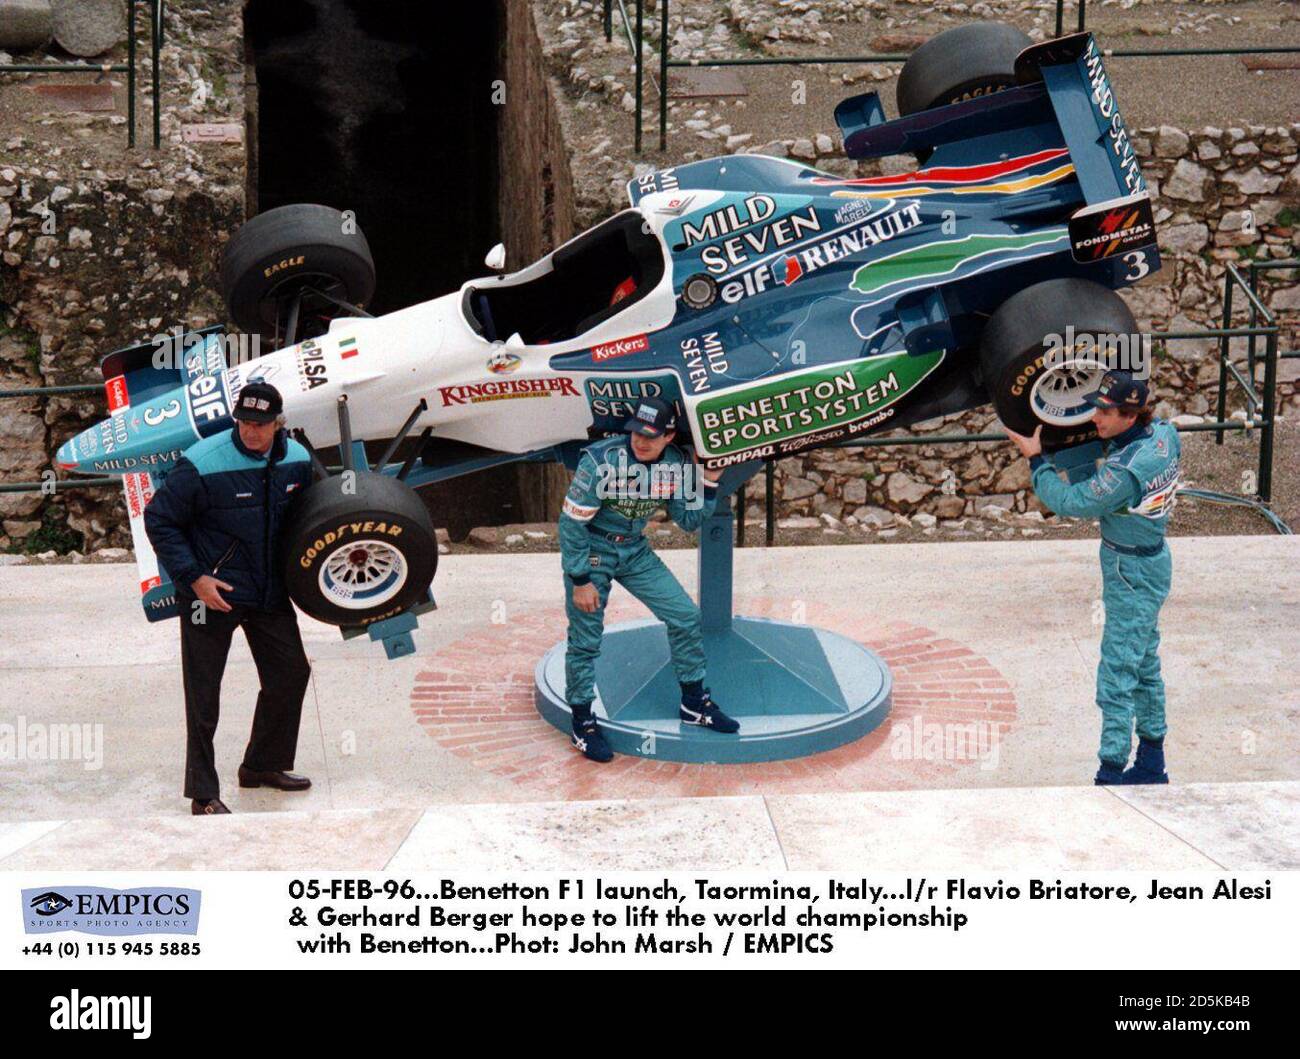 05-FEB-96. Benetton F1 launch, Taormina, Italy. l/r Flavio Briatore, Jean  Alesi & Gerhard Berger hope to lift the world championship with Benetton  Stock Photo - Alamy